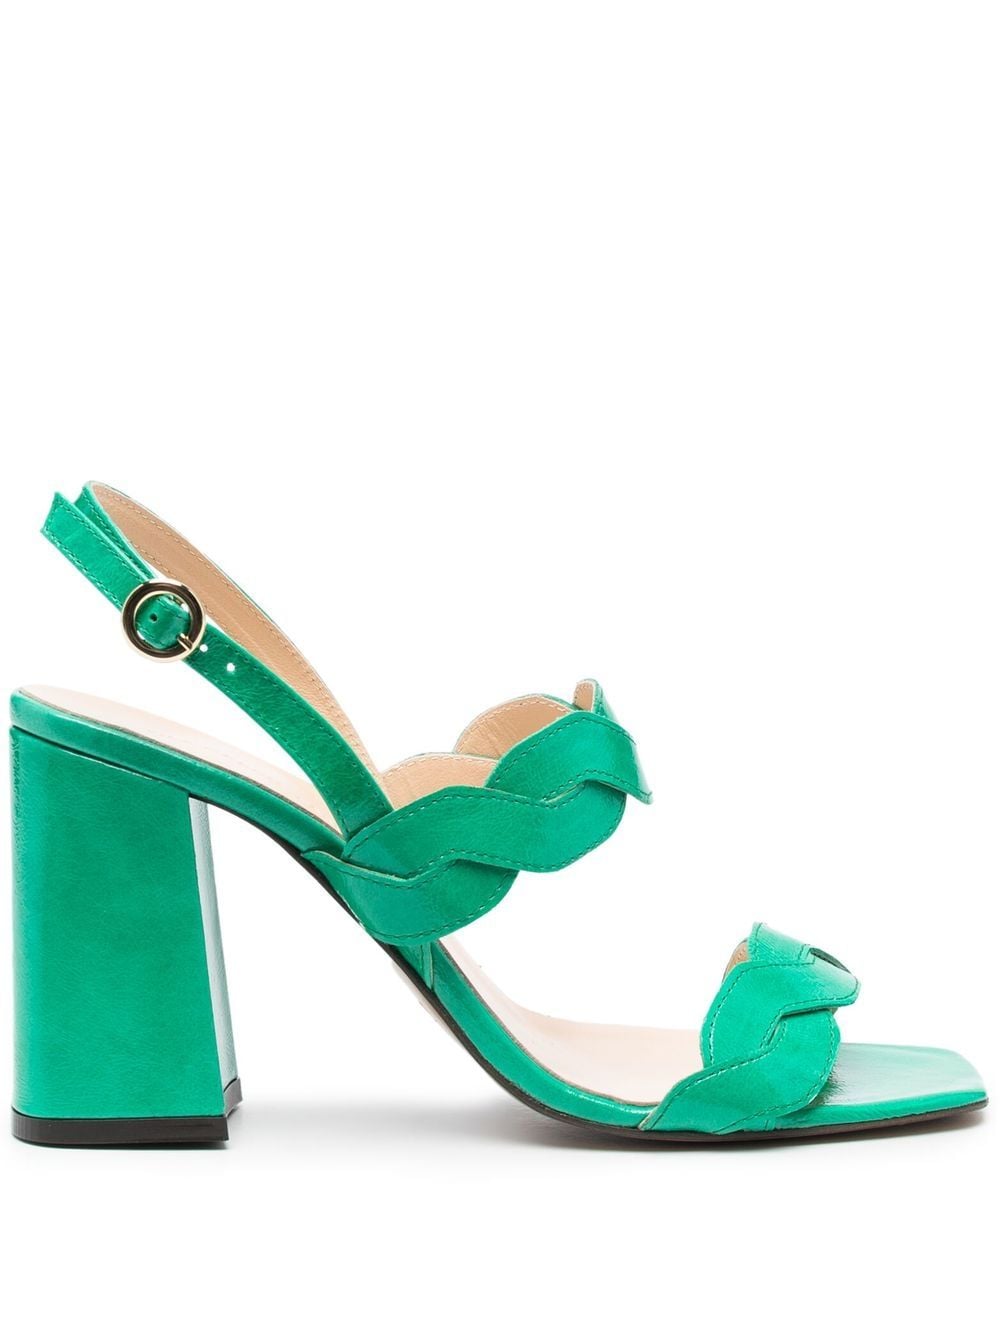 Tila March Rhea 95mm block heel sandals - Green von Tila March